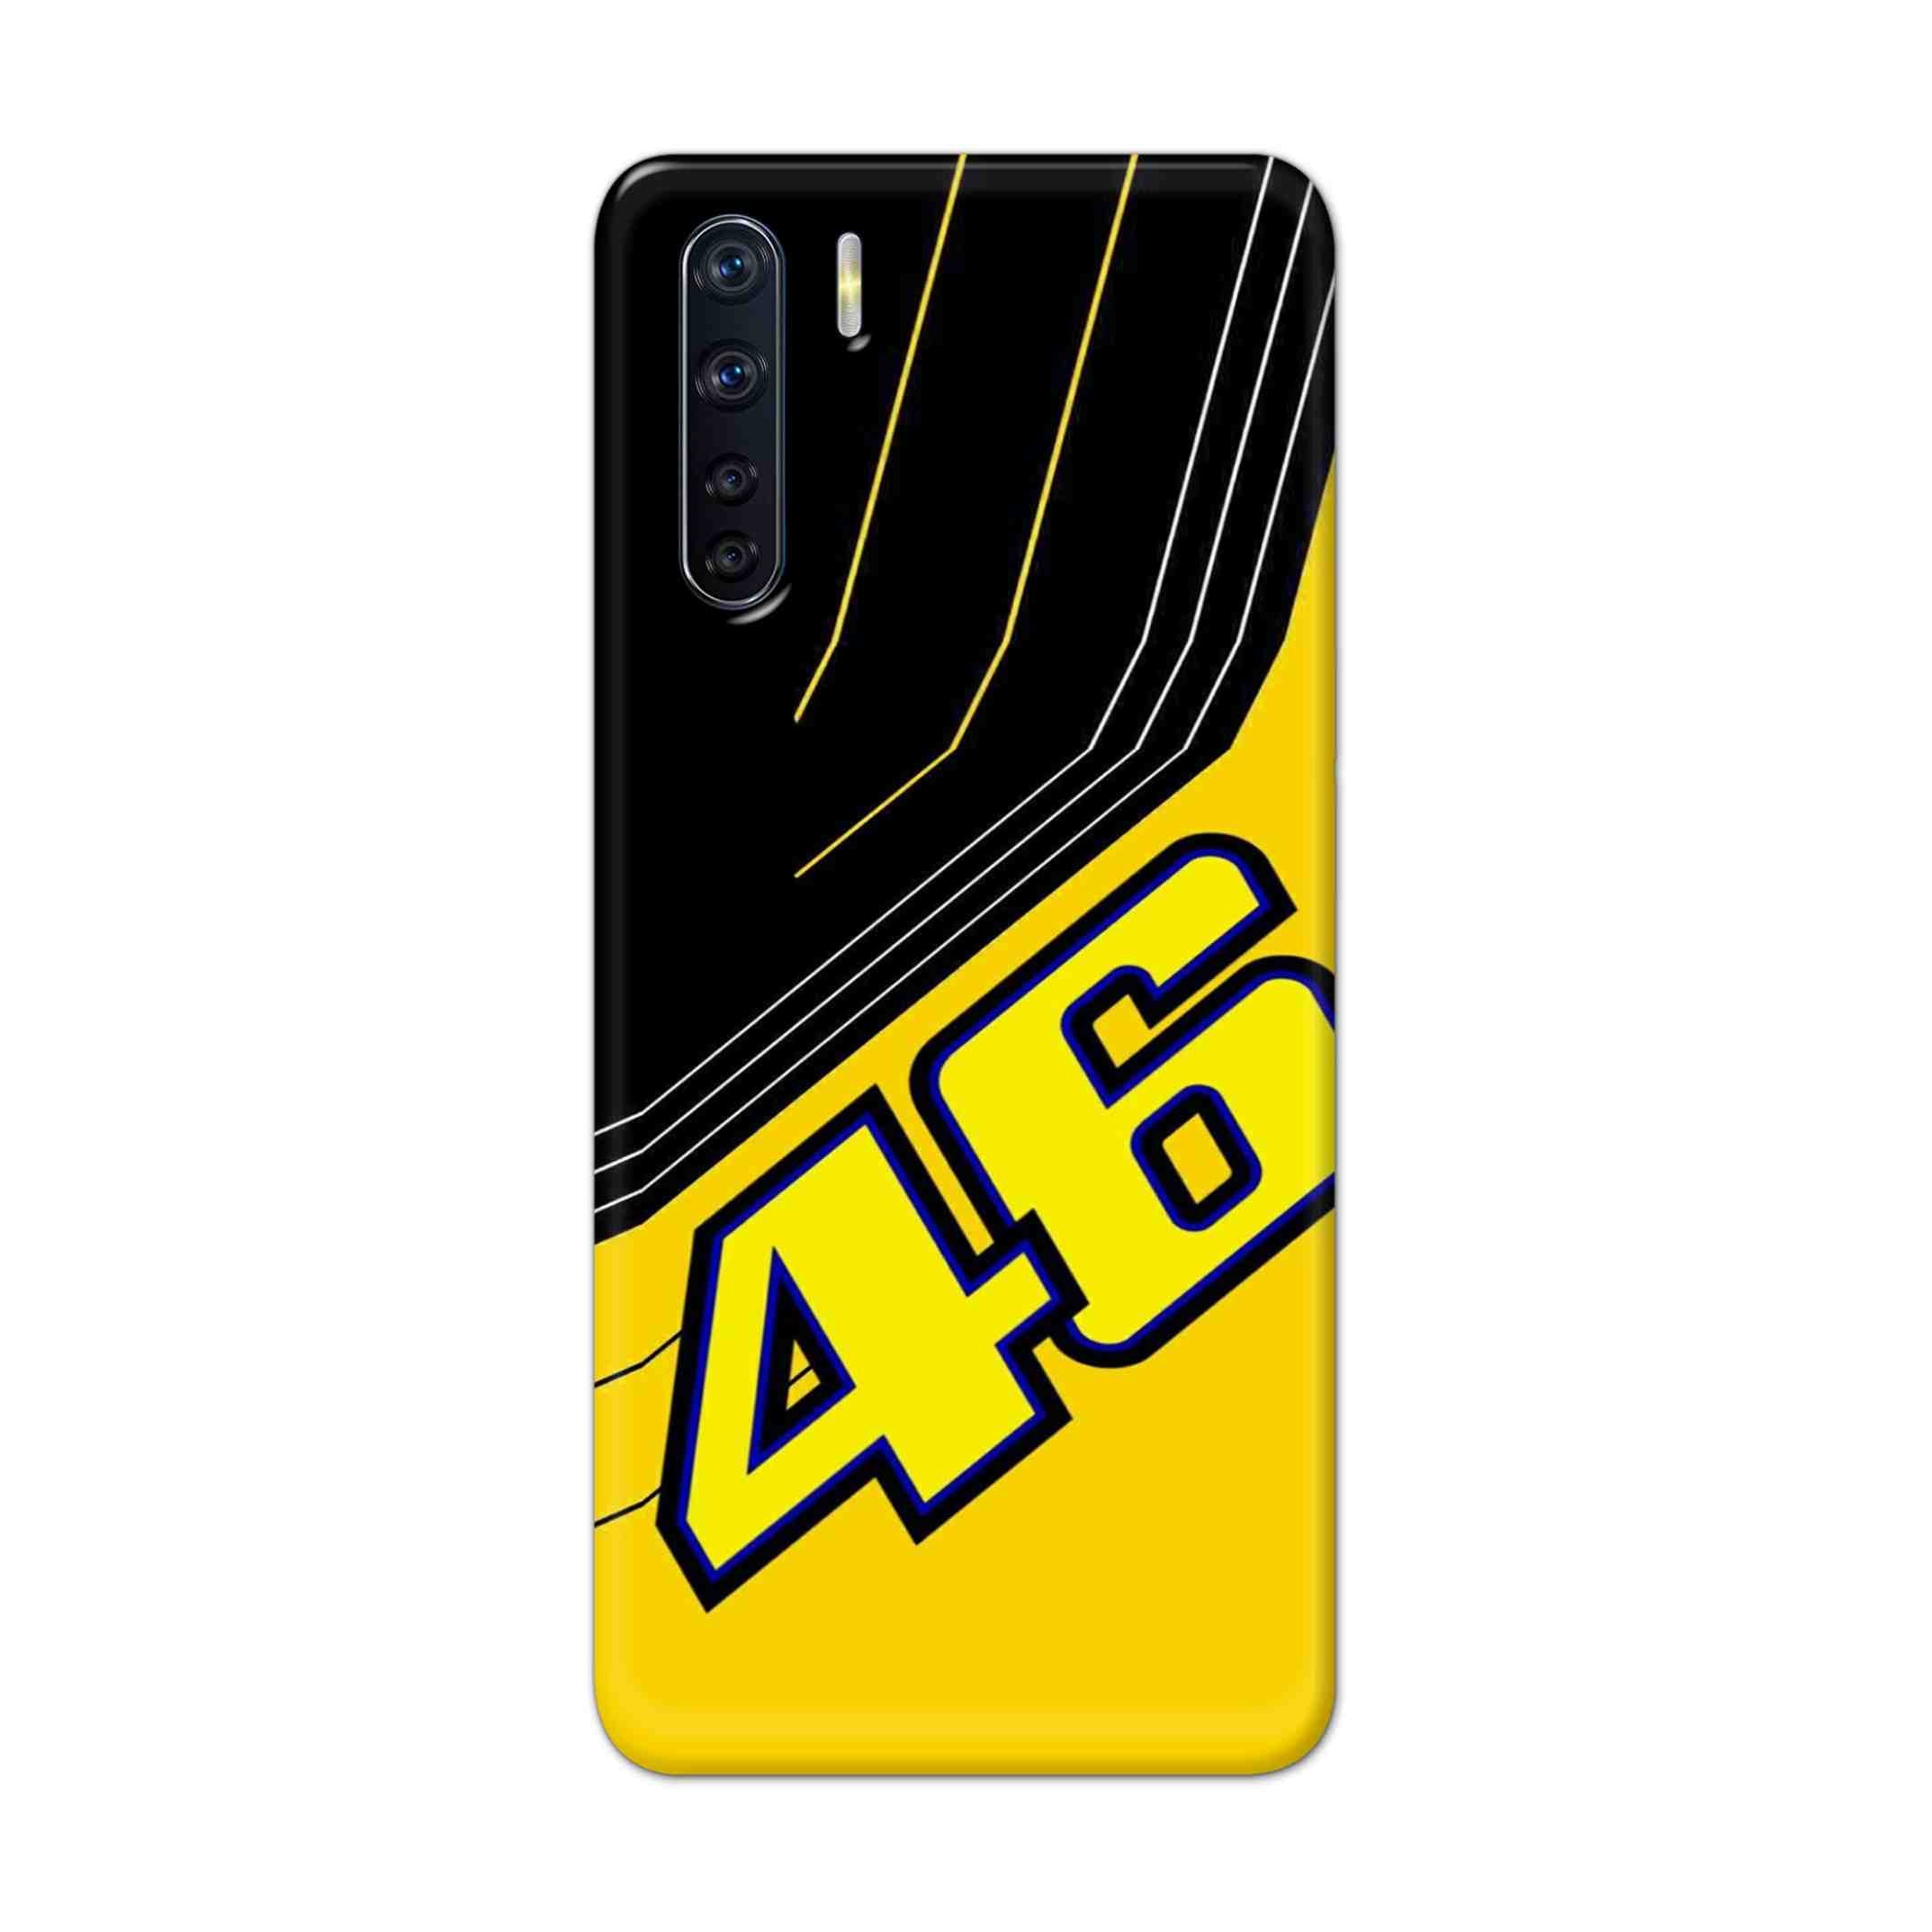 Buy 46 Hard Back Mobile Phone Case Cover For OPPO F15 Online